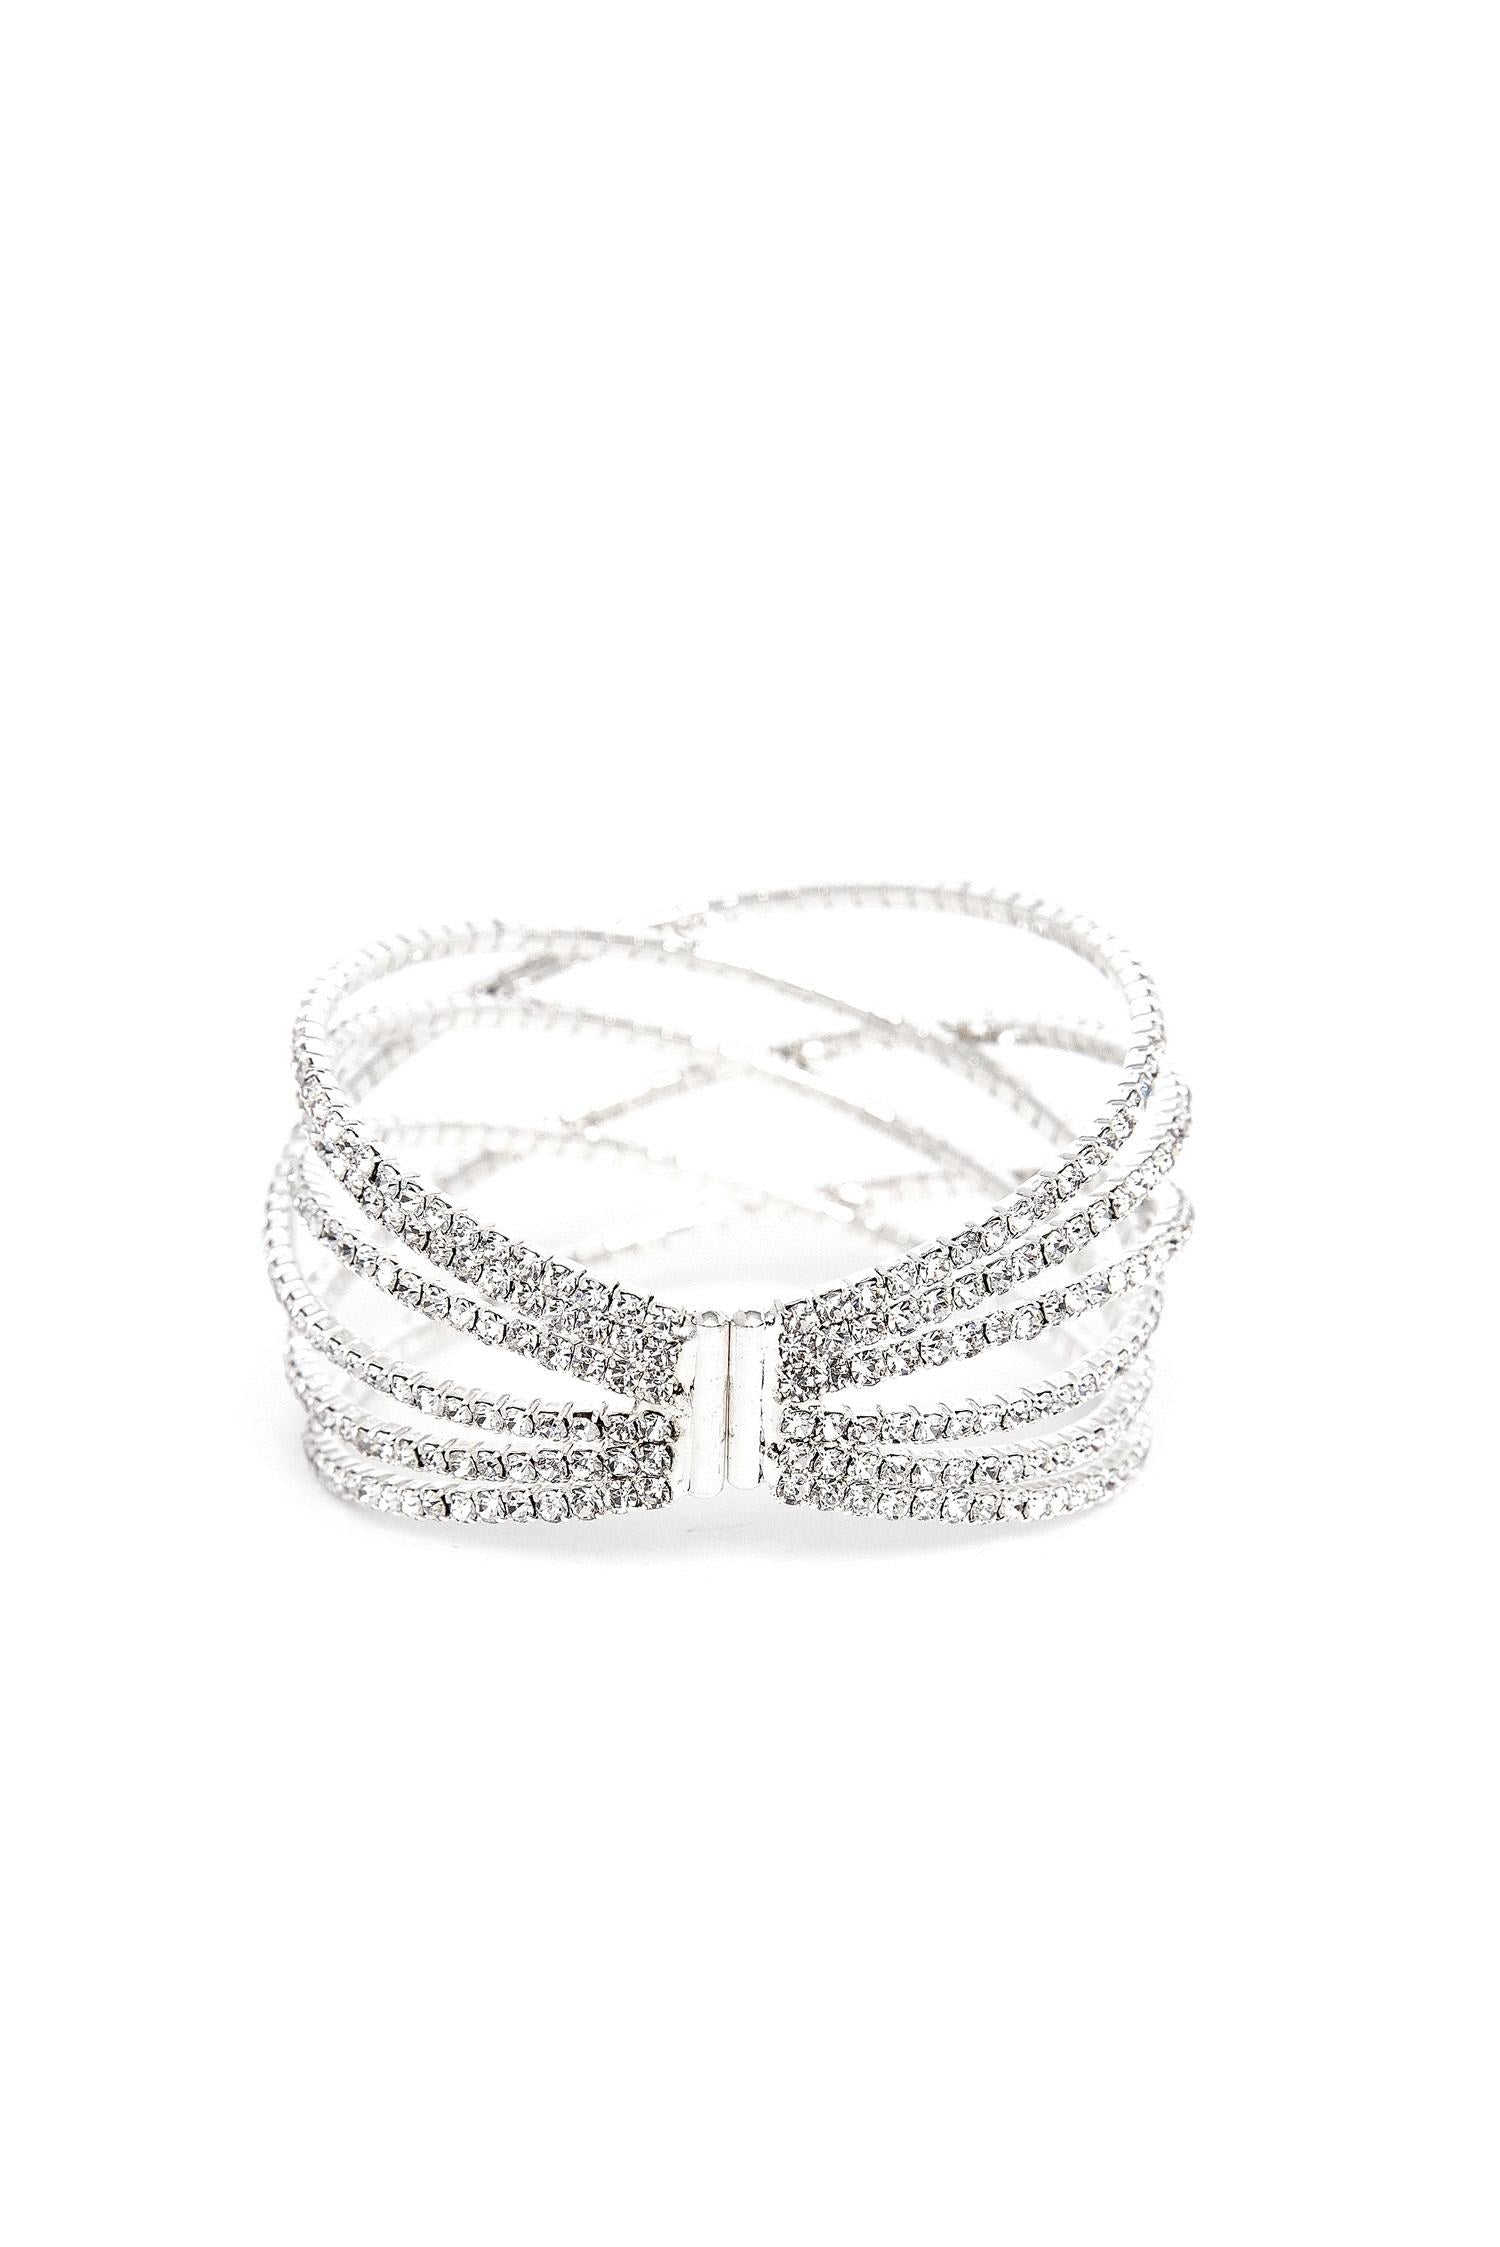 Rhinestone Lattice Cuff Bracelet - Lady Occasions